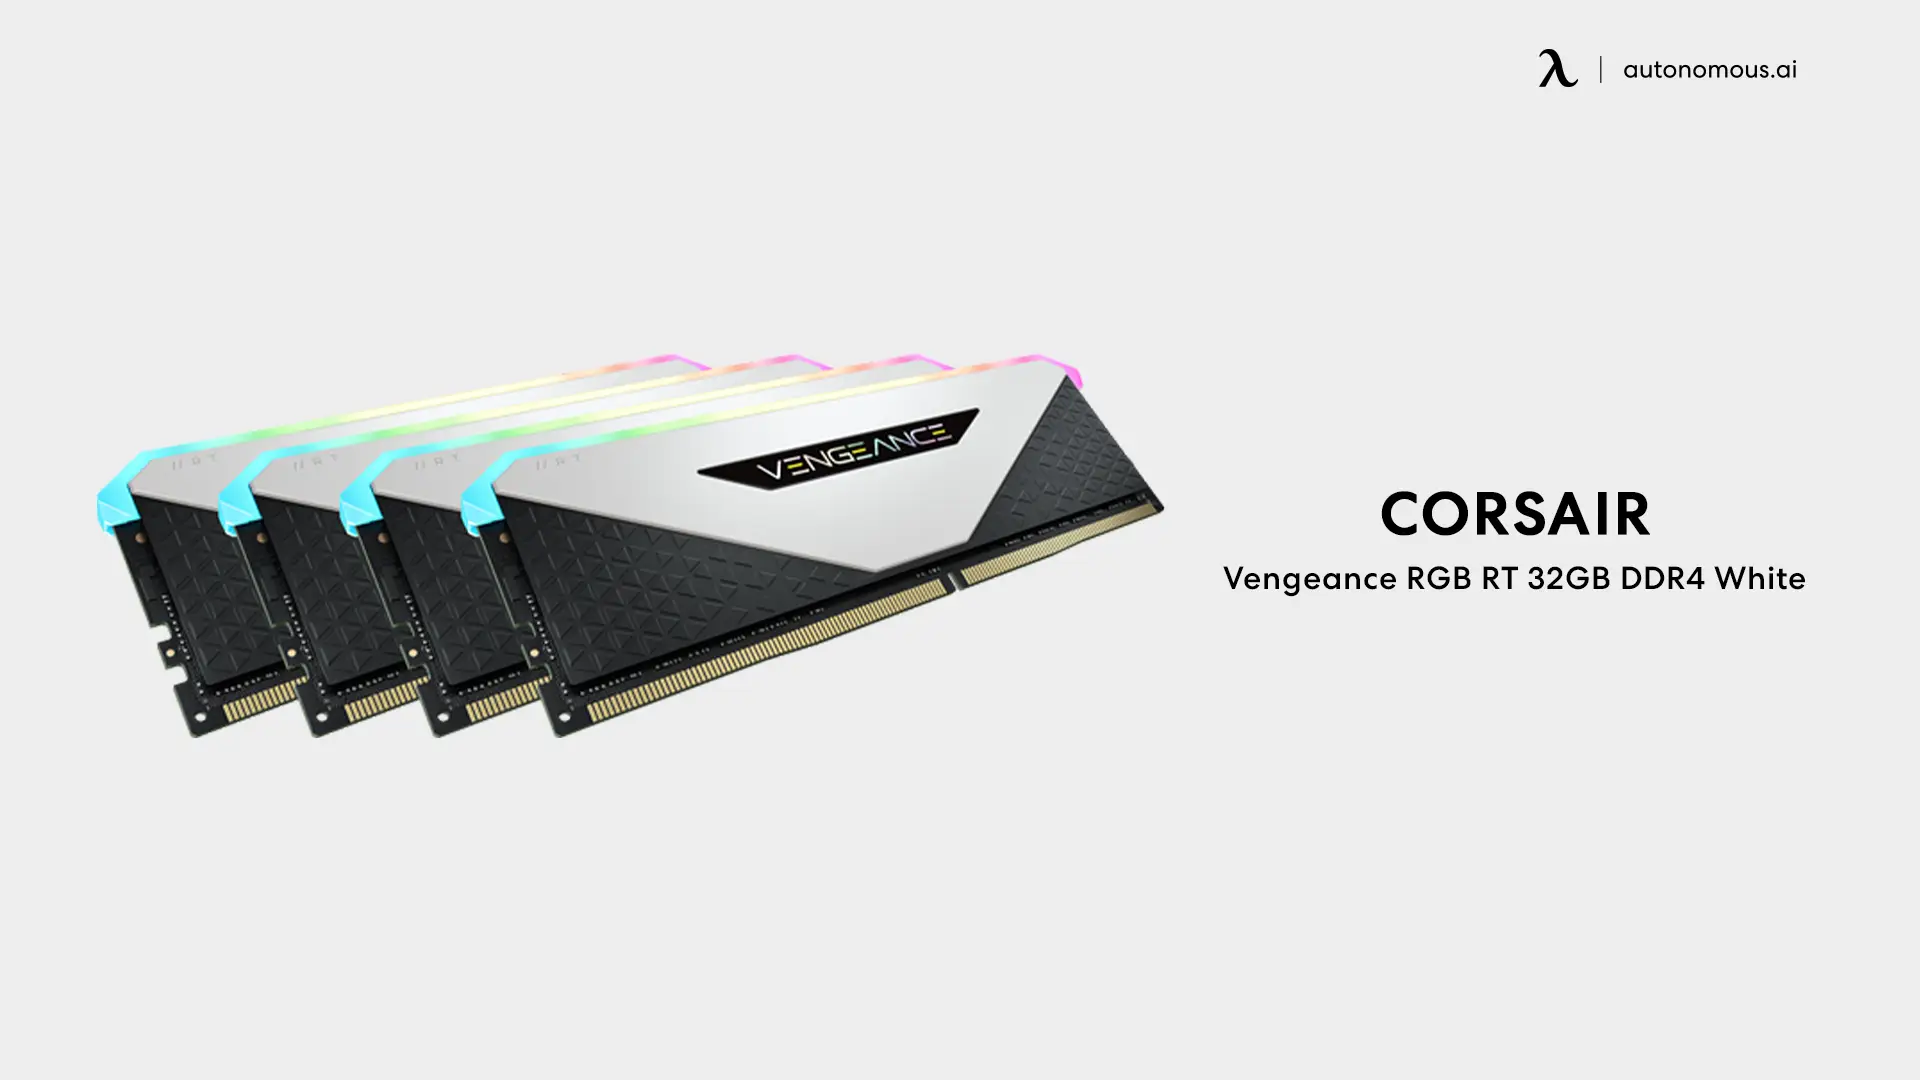 Vengeance RGB RT 32GB DDR4 White from Corsair